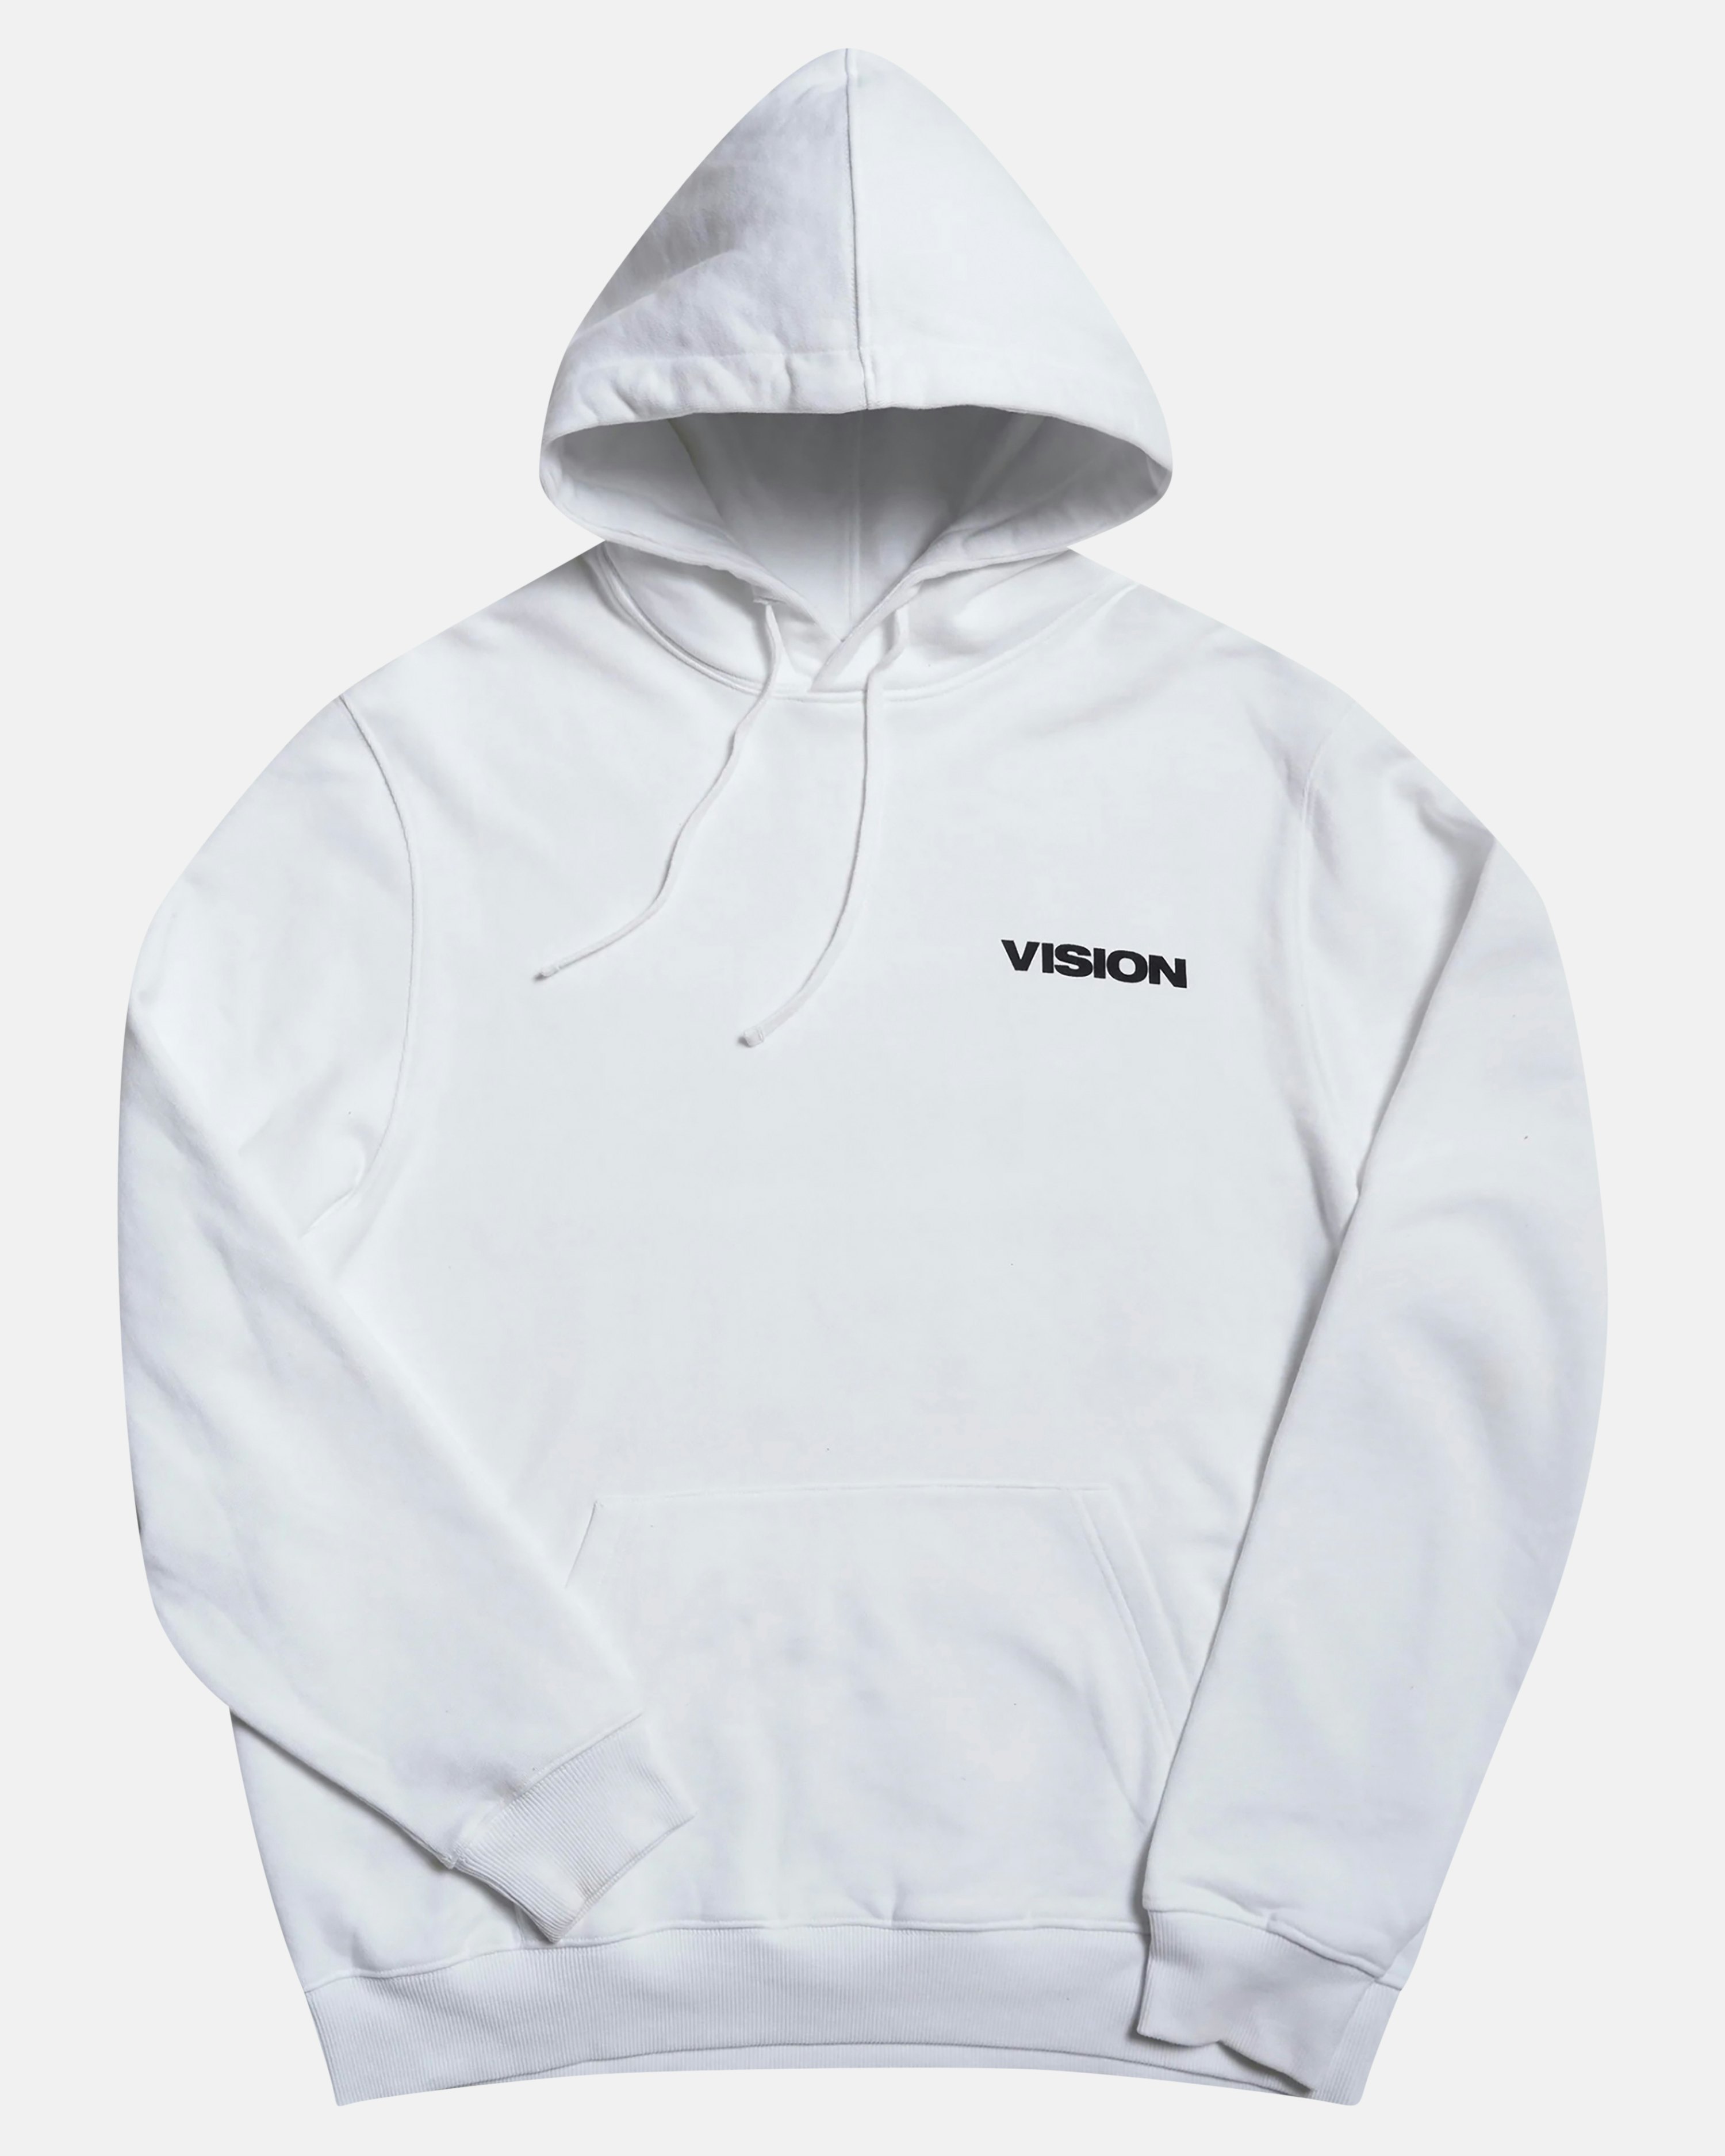 Vision Street Wear Hoodie - OG Box Logo White | Men | Junkyard